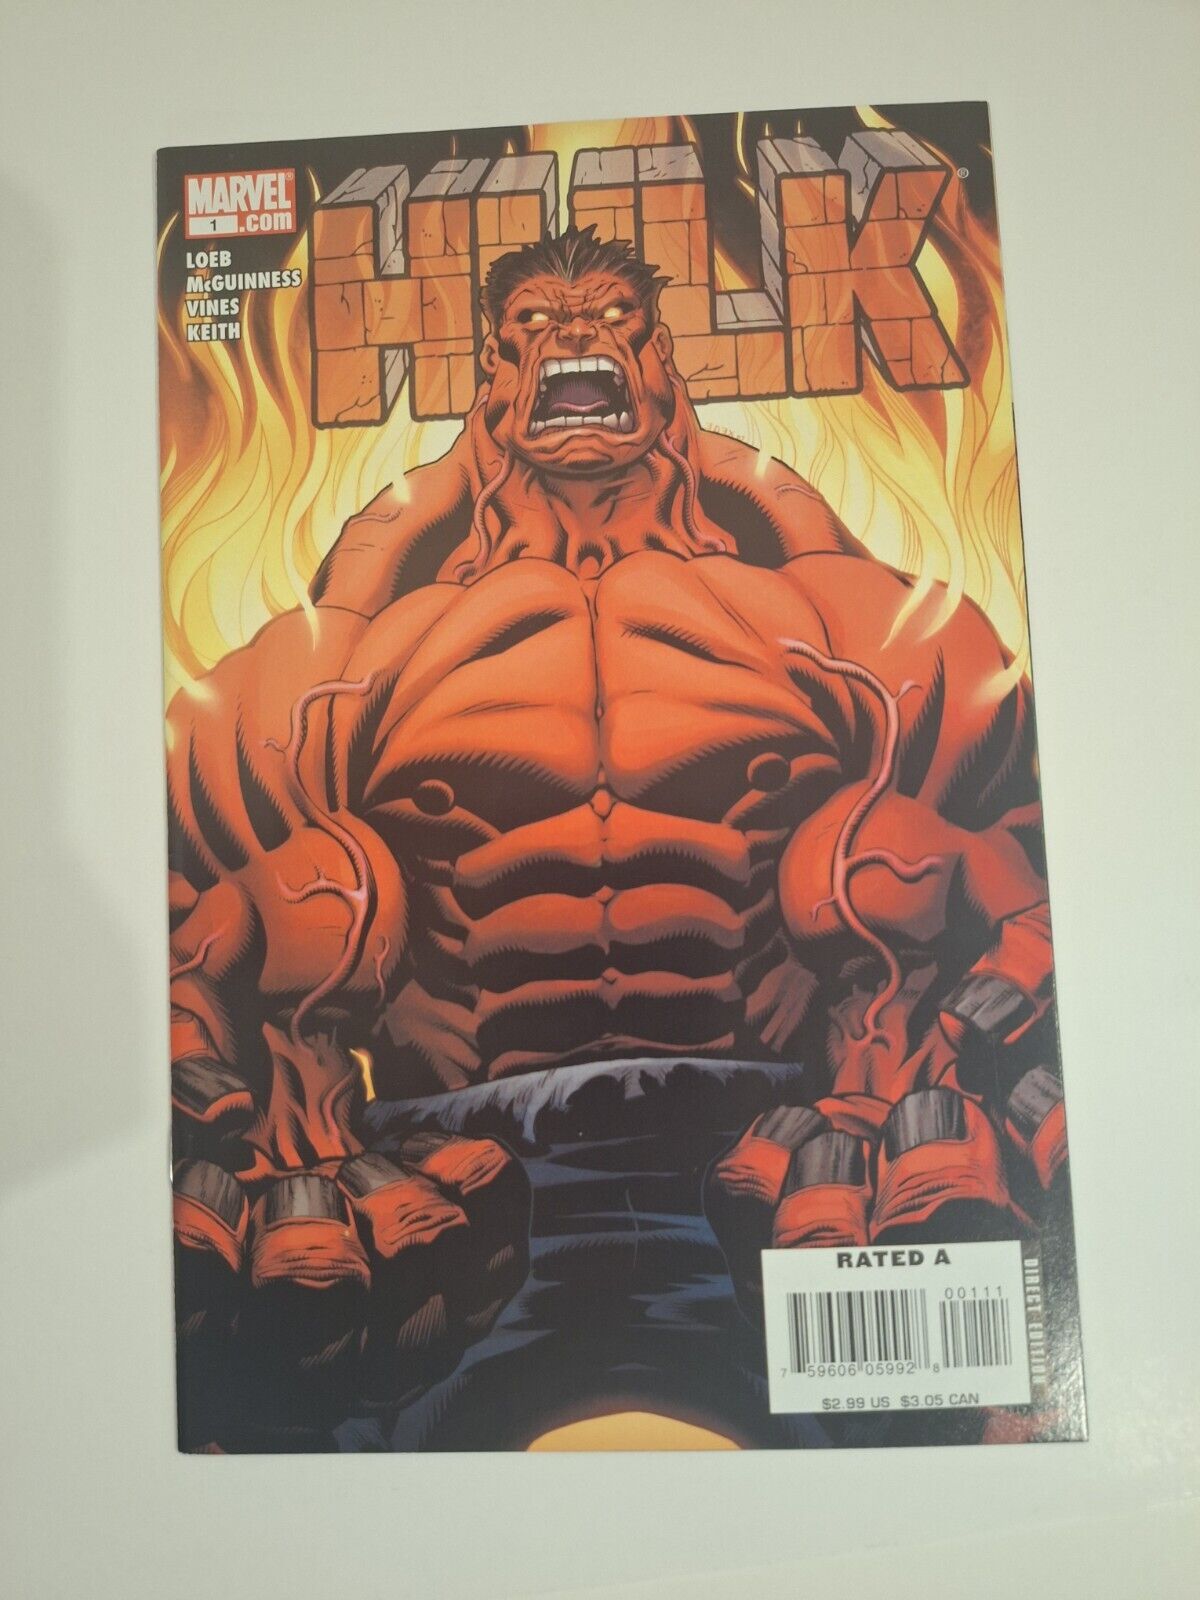 The Hulk #1 (Marvel Comics March 2008)